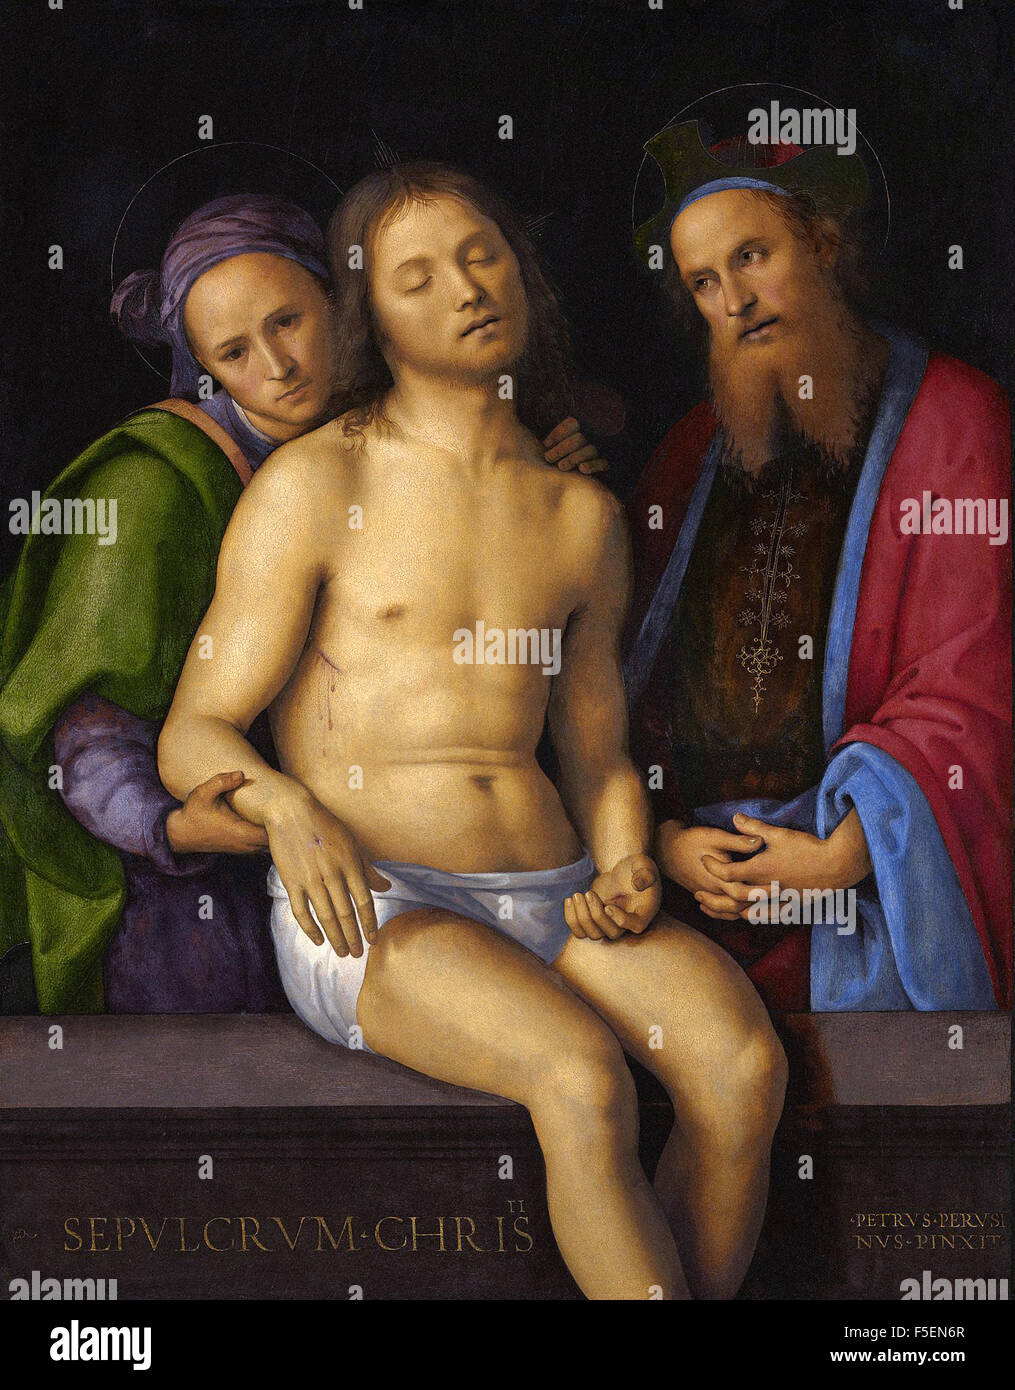 Pietro Perugino - Dead Christ with Joseph of Arimathea and Nicodemus (Sepulcrum Christi) Stock Photo